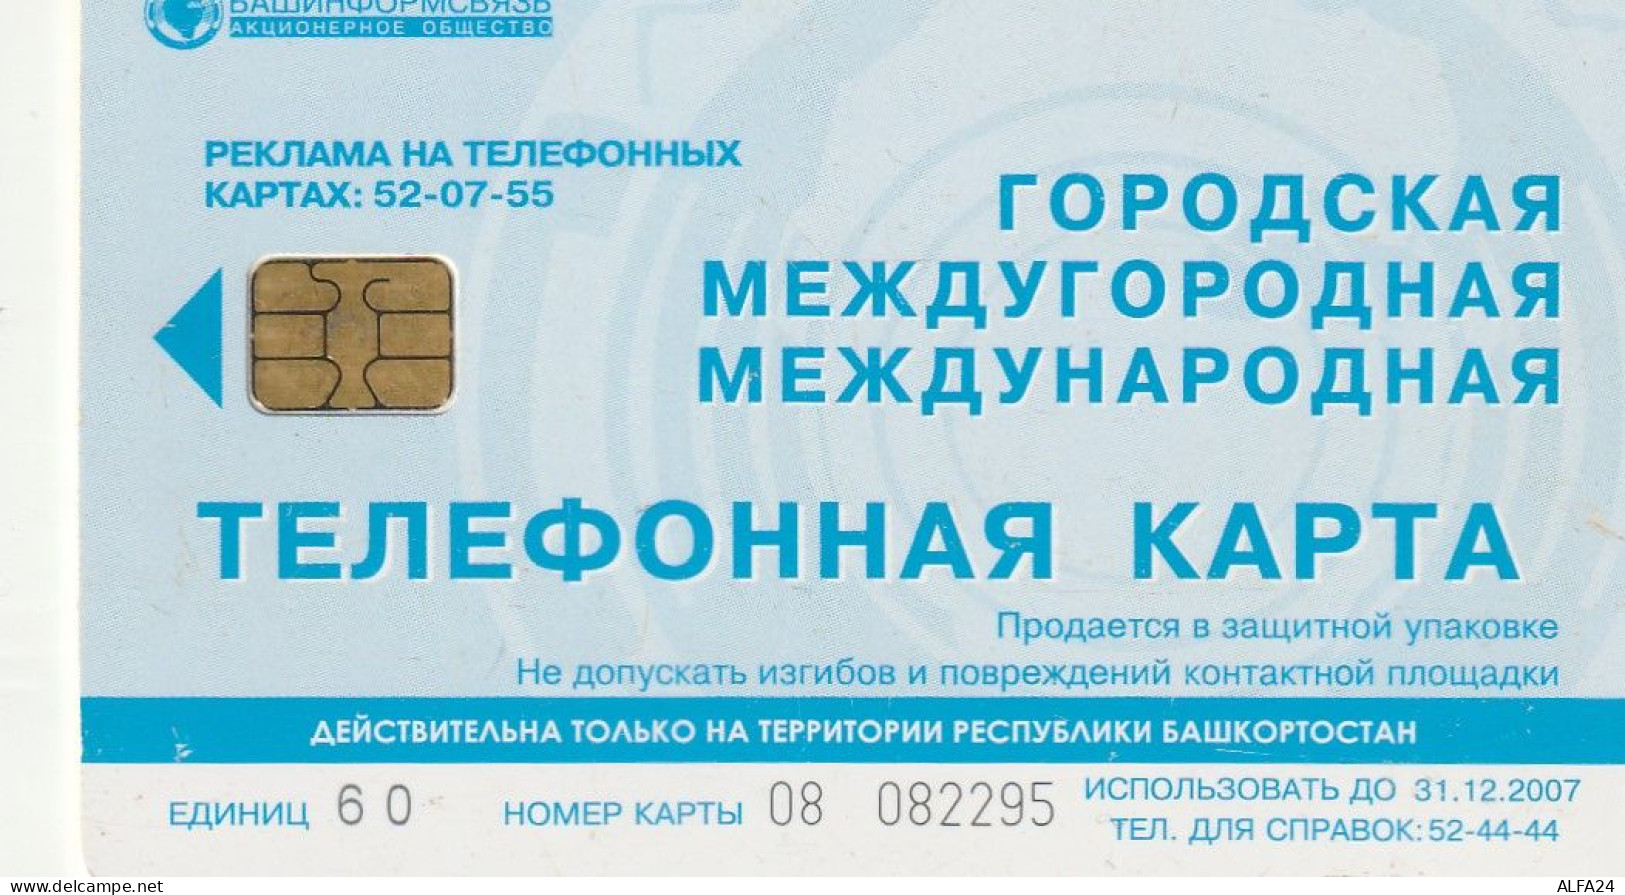 PHONE CARD RUSSIA Bashinformsvyaz - Ufa (E9.25.2 - Russia